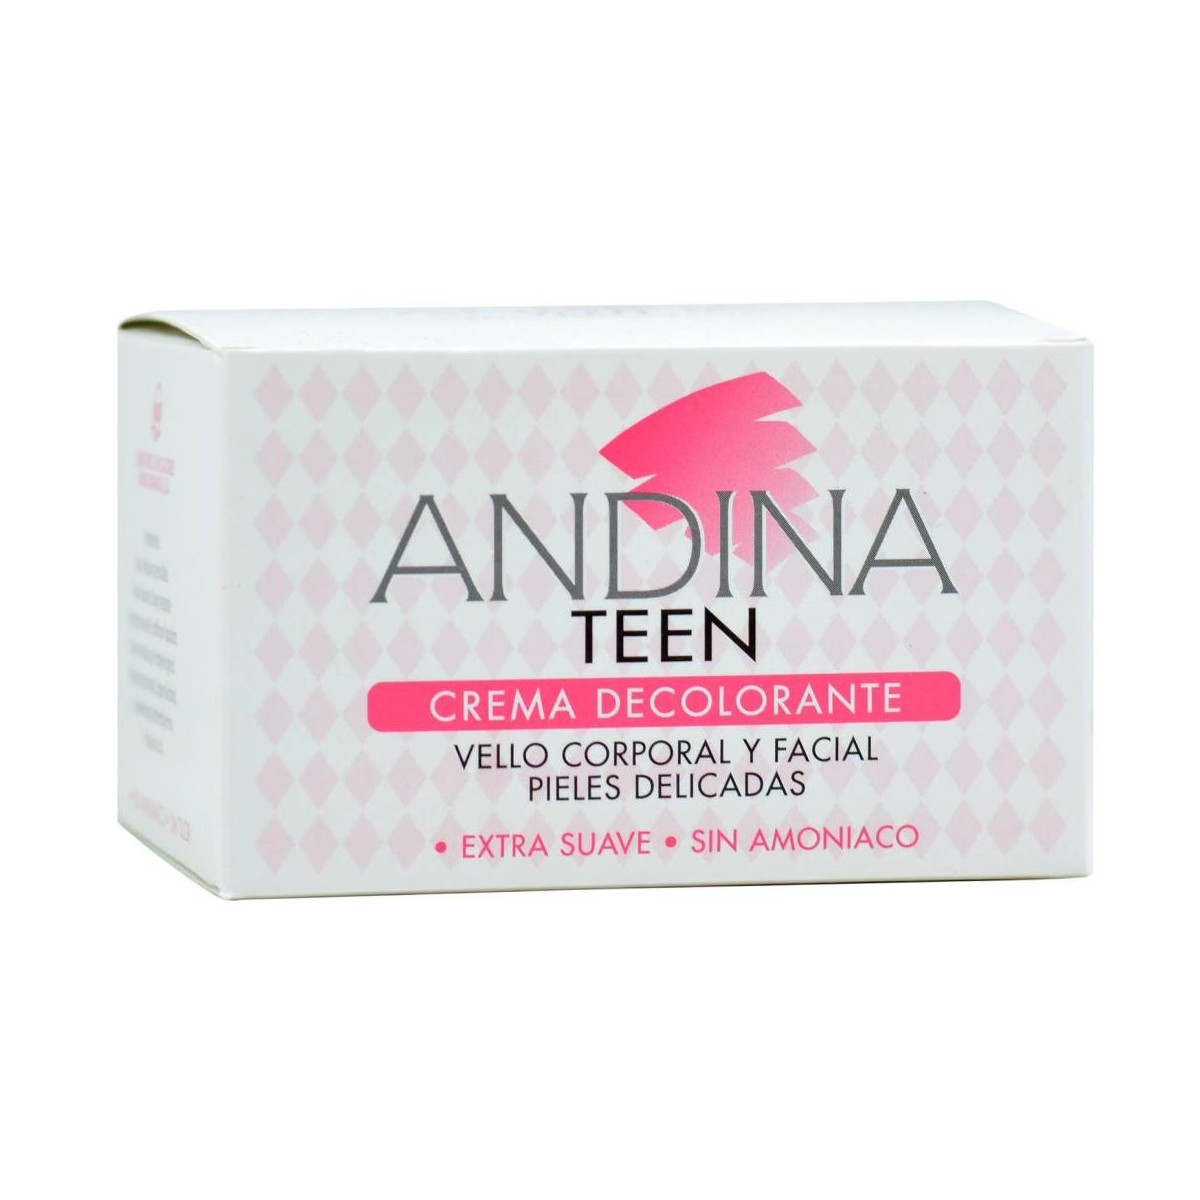 andina-teen-crema-decolorante-30-ml